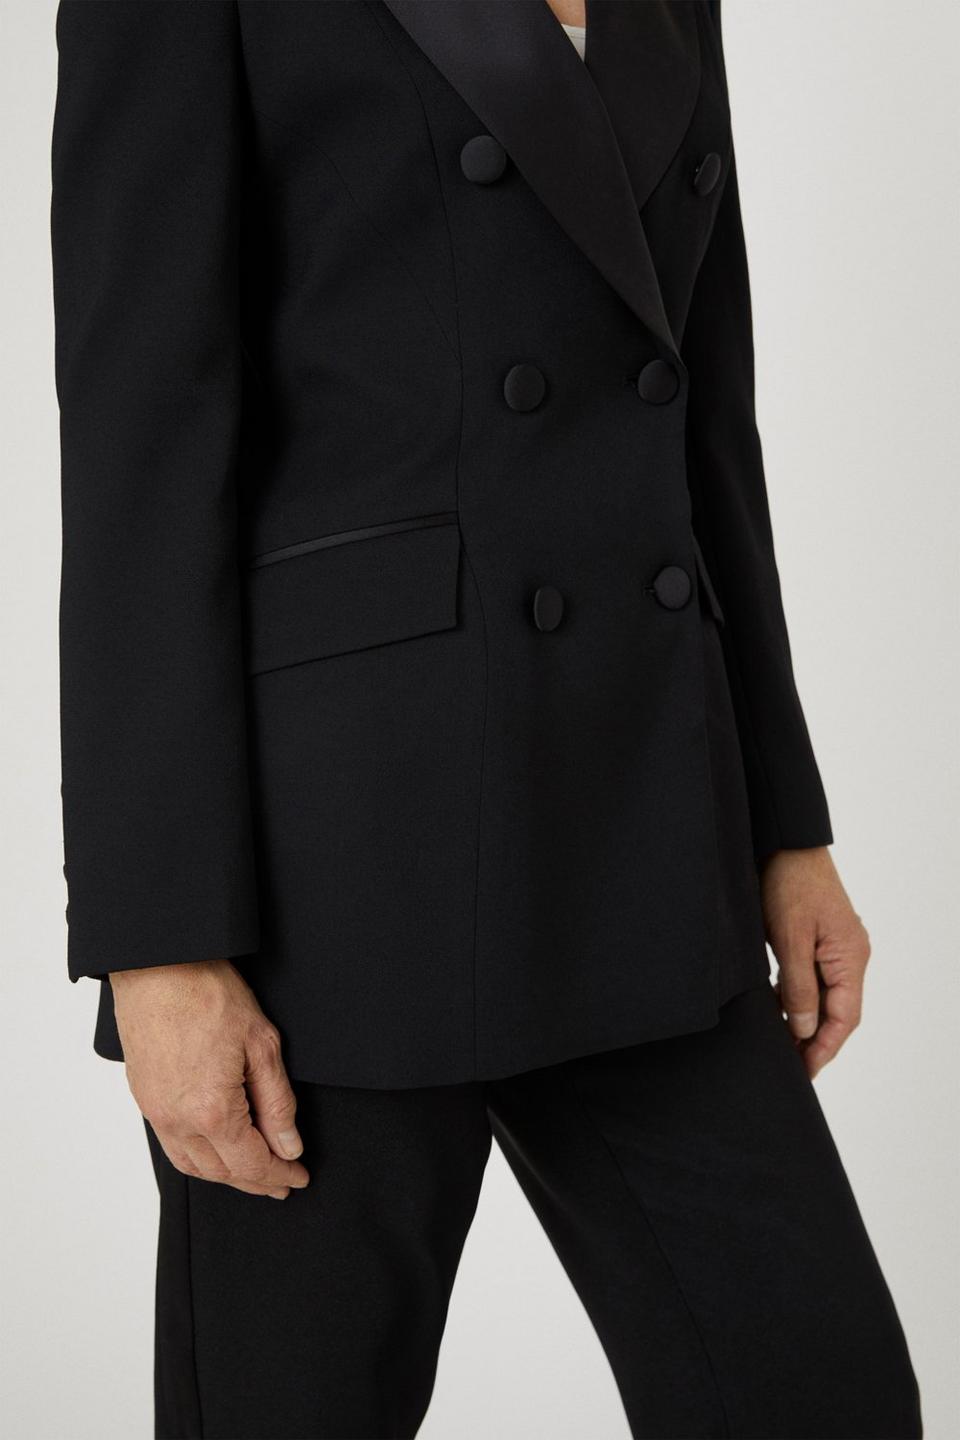 Jackets & Coats | Premium Hourglass Silhouette Blazer | Coast